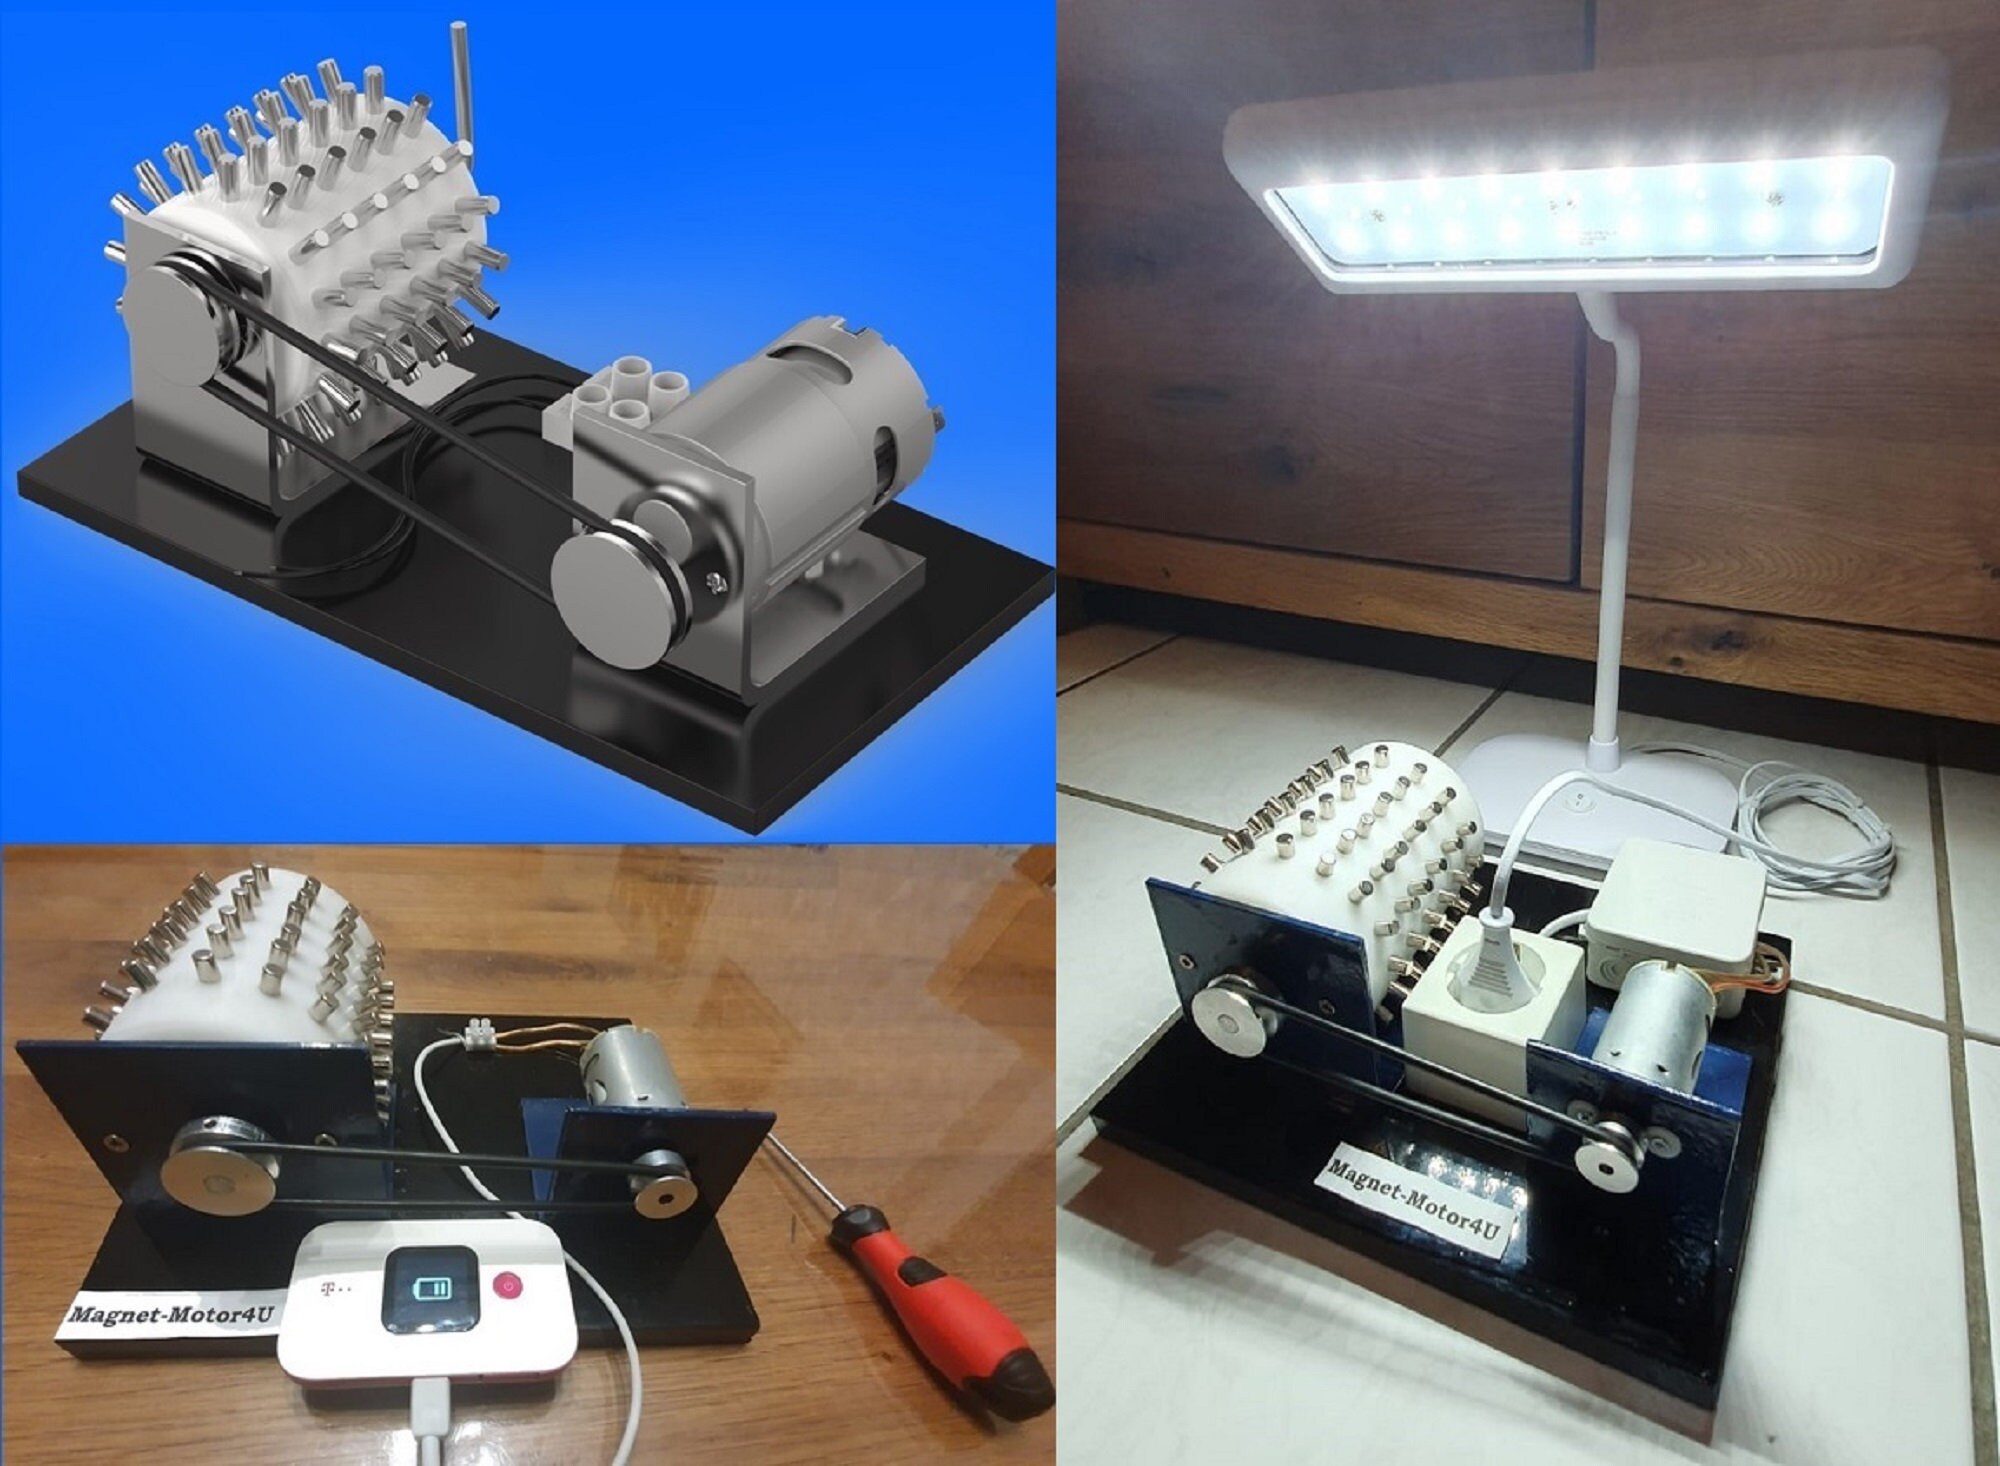 Kaarsen exegese Voorbeeld Magneetmotor vrije energiegenerator 3D Model STL STEP DIY | Etsy Nederland